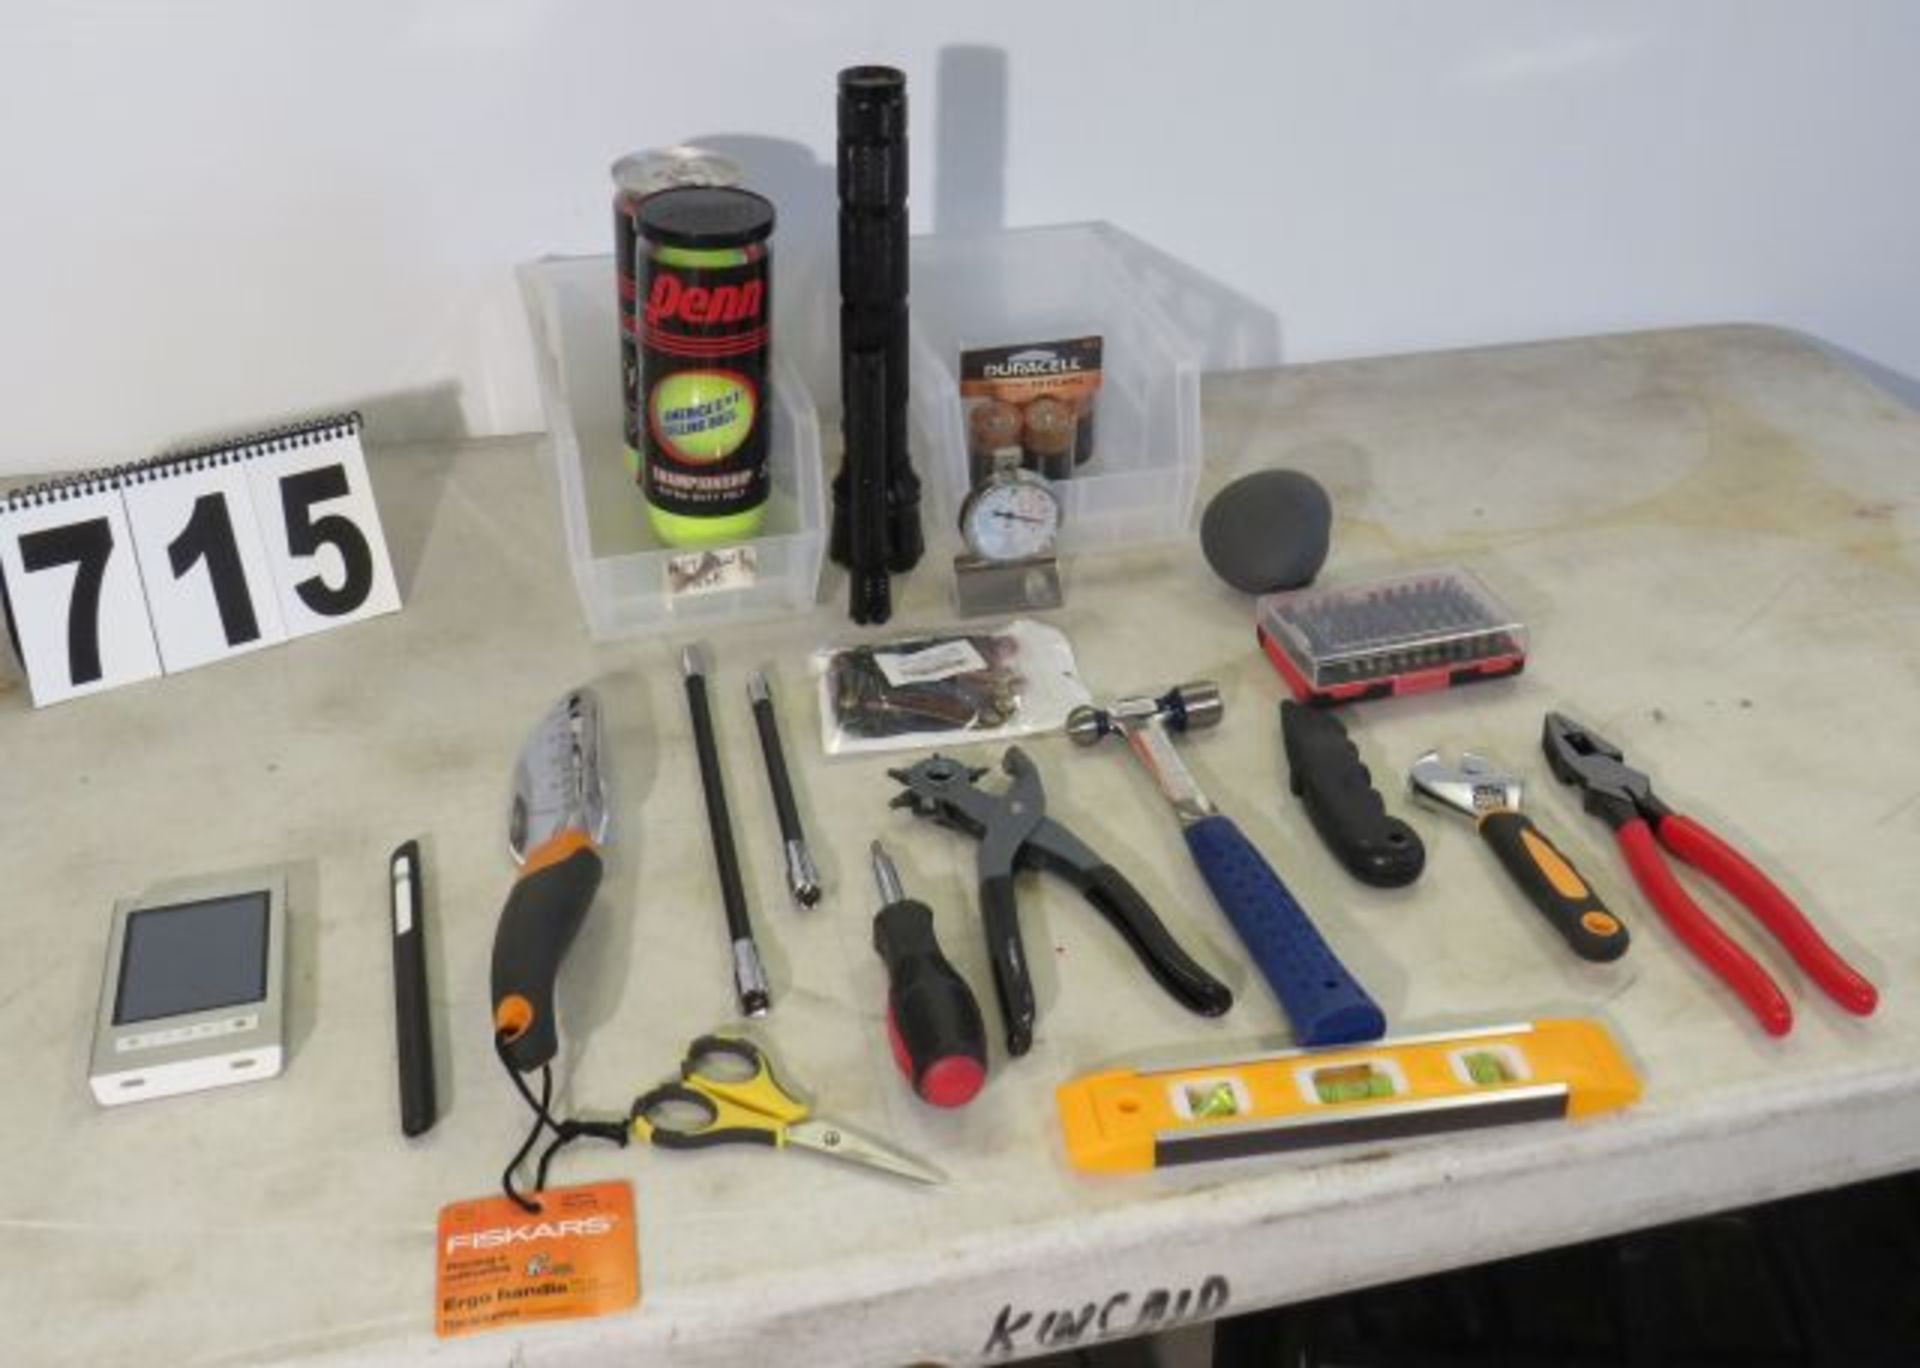 mixed tools, flashlights, tennis balls, oven temp gauge - Image 3 of 3